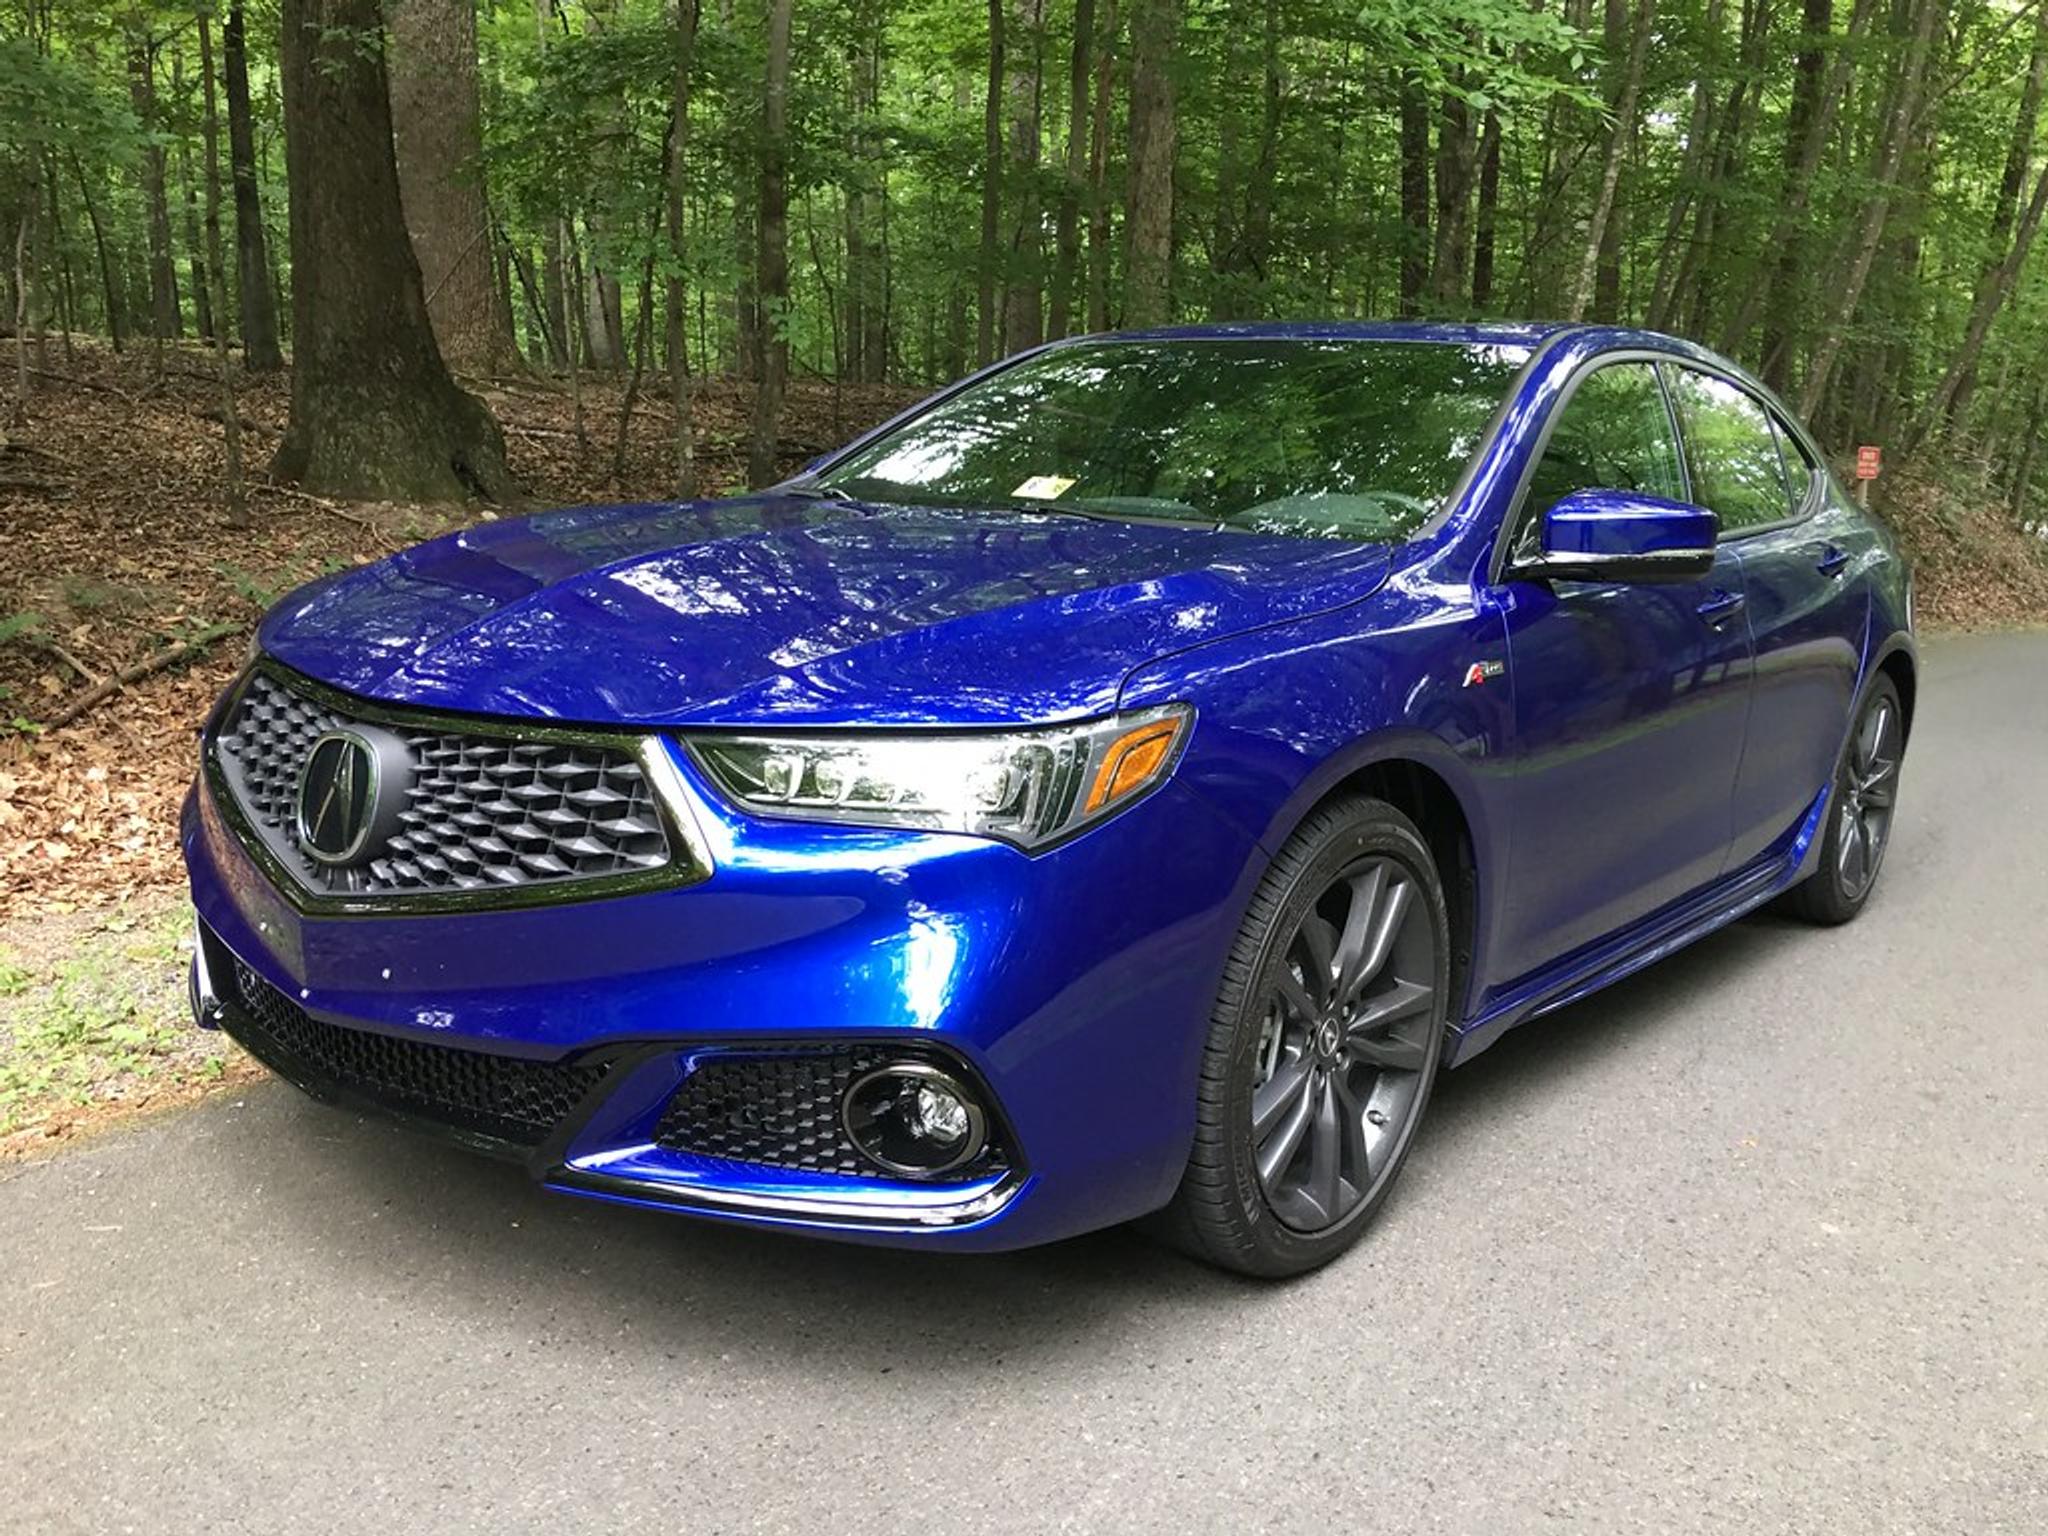 Metallic blue Acura TLX front